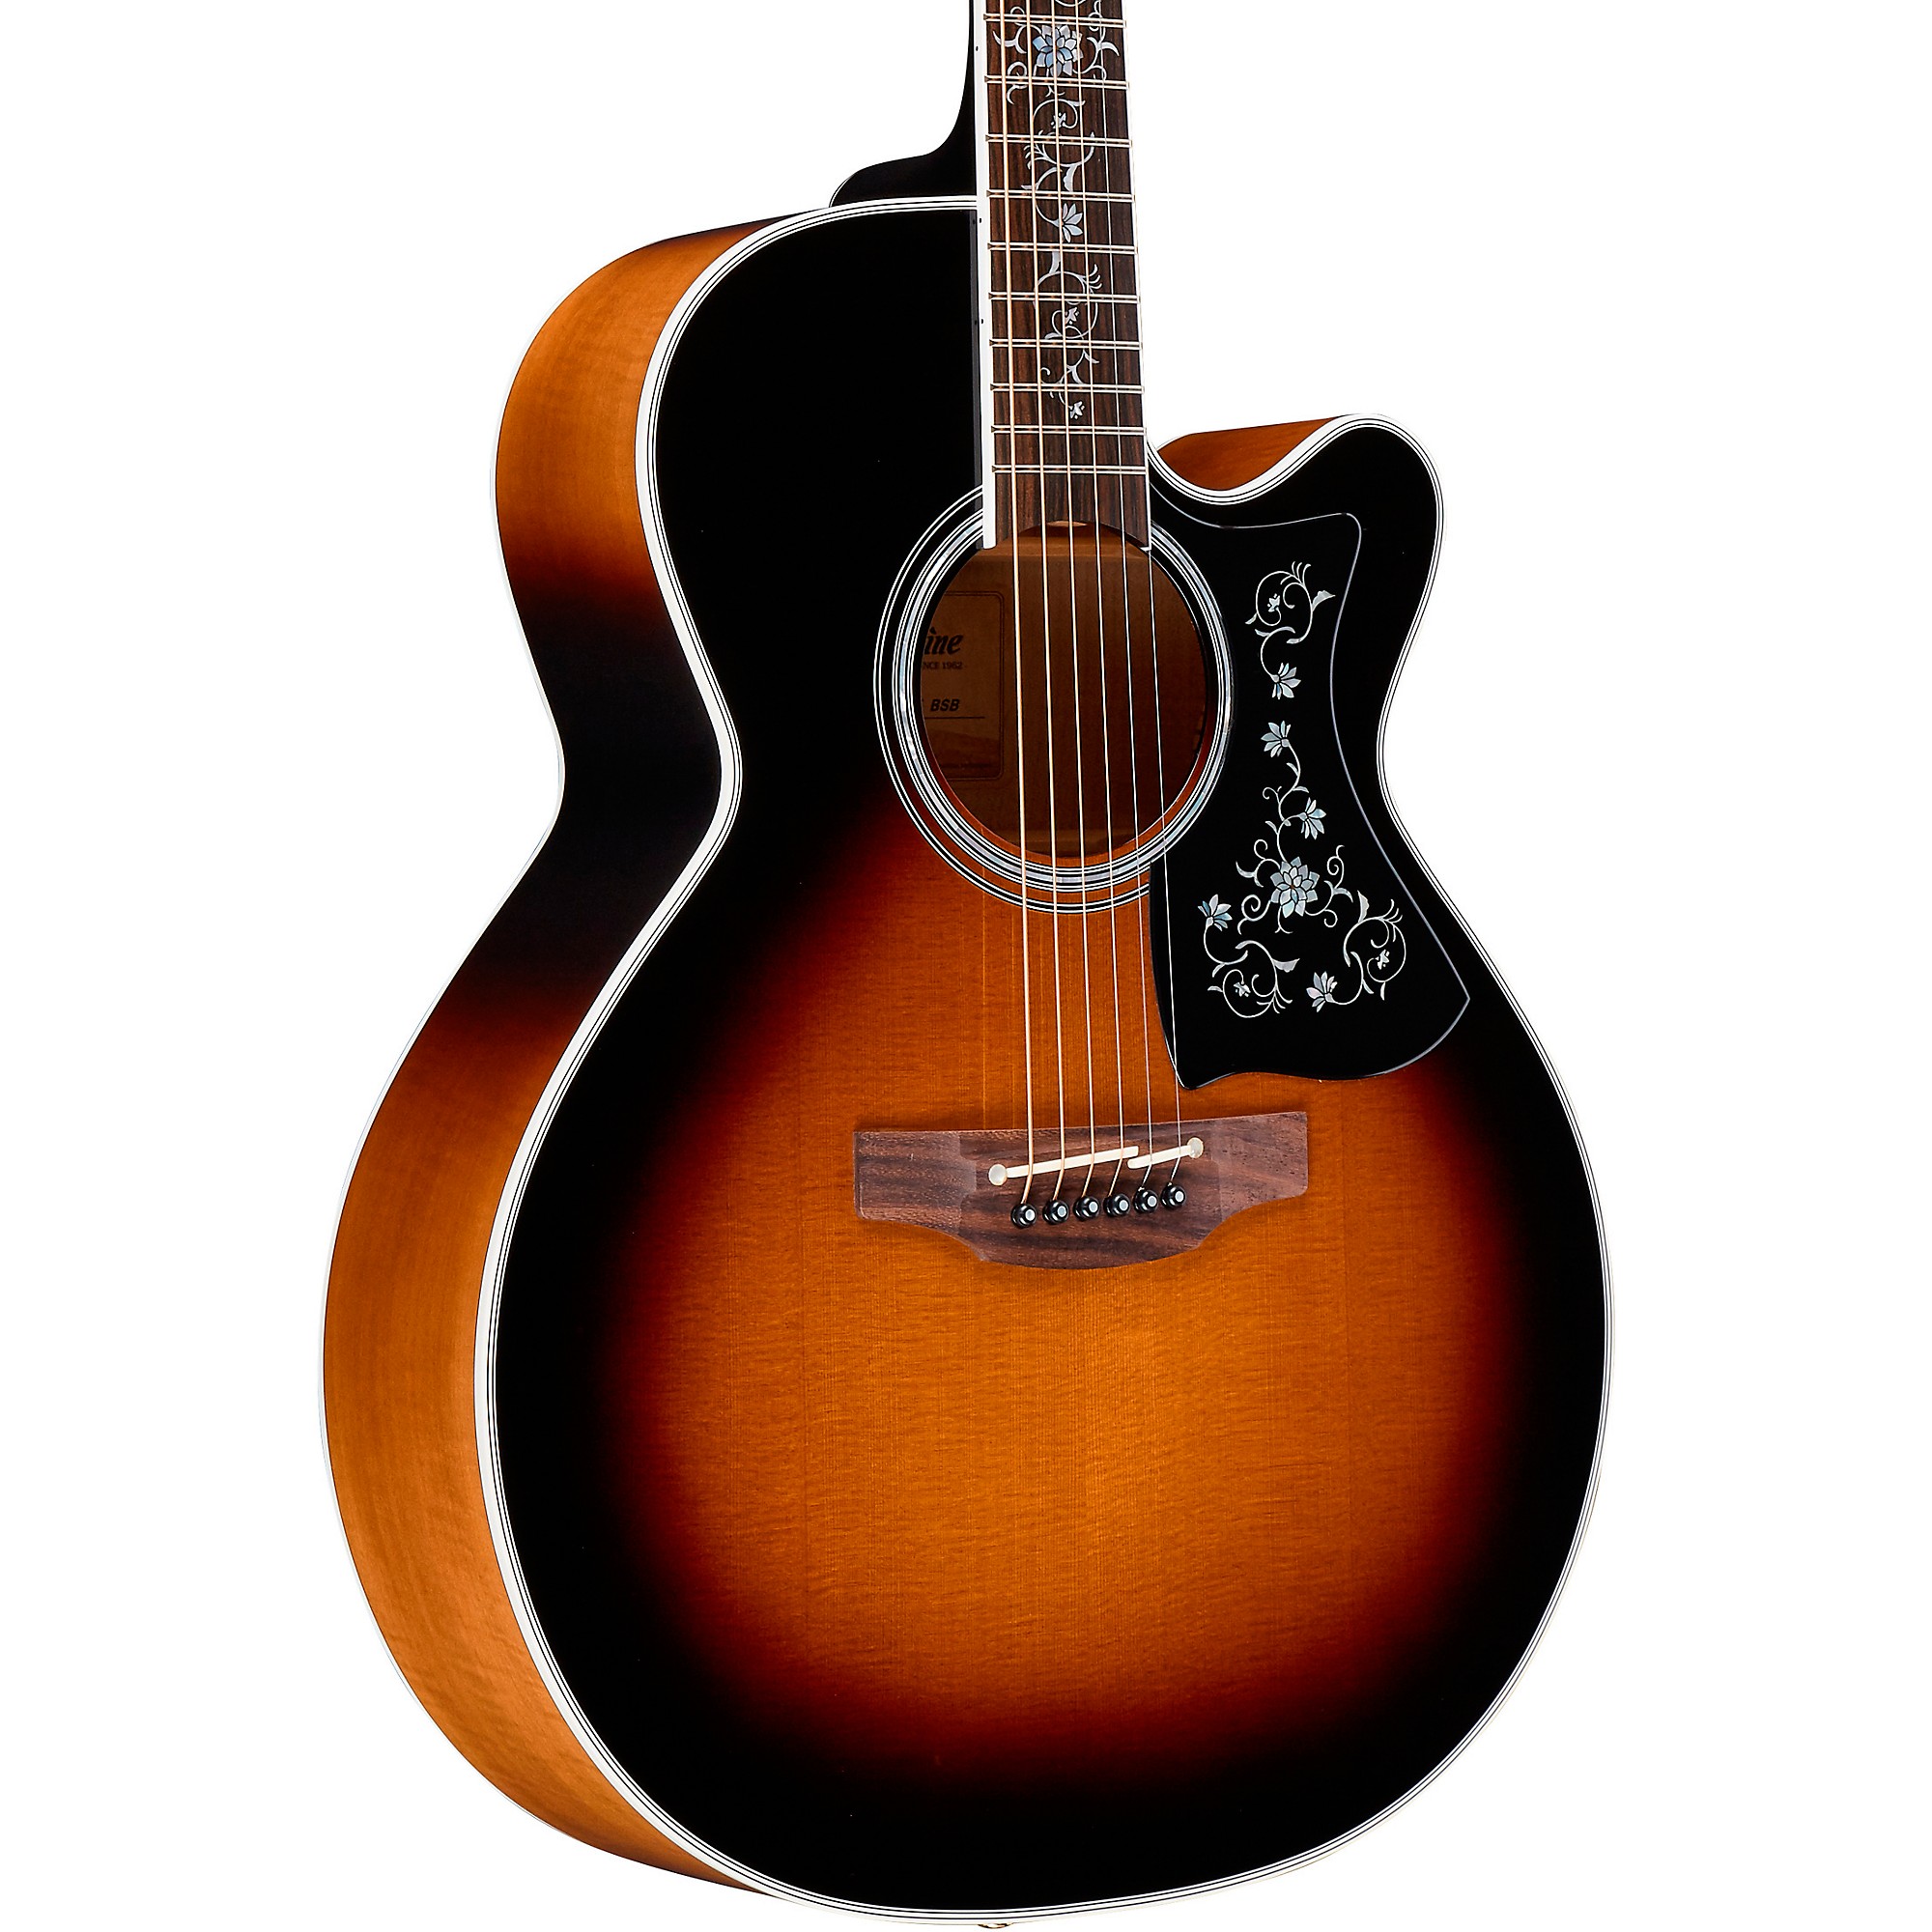 Акустически-электрическая гитара Takamine EF450C Thermal Top Brown Sunburst электроакустическая гитара takamine gd51ce brown sunburst